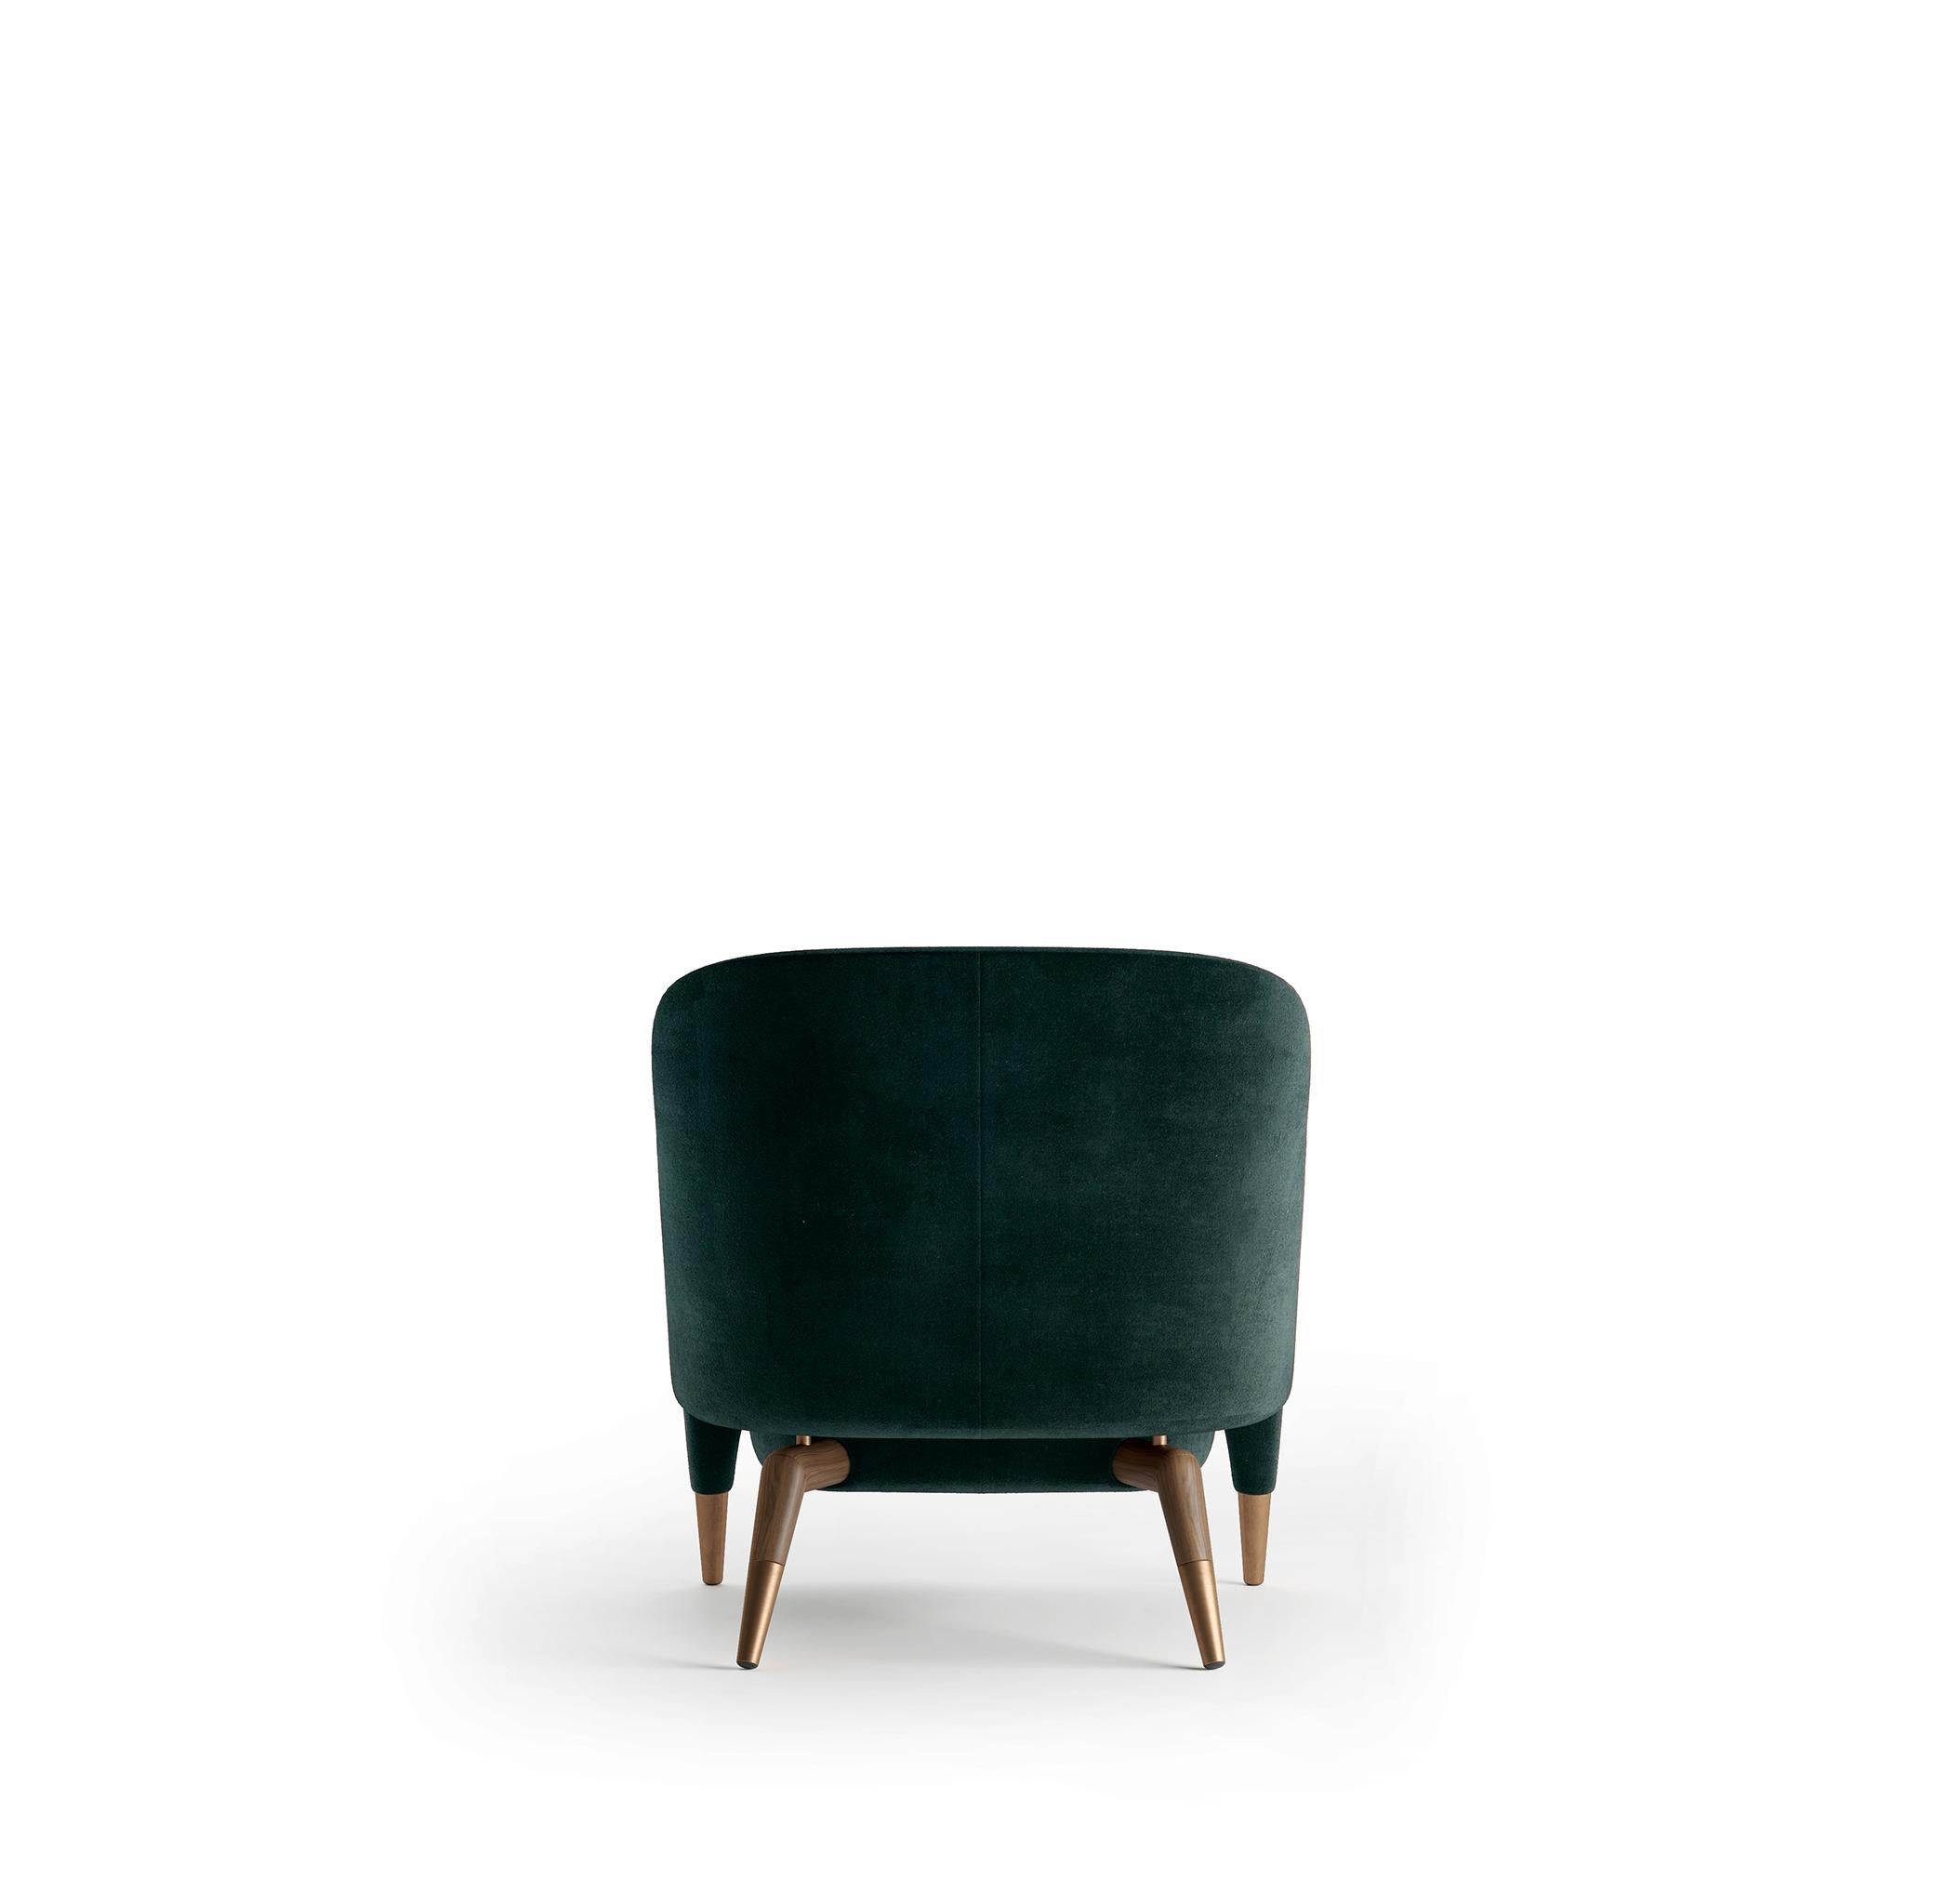 Modern Dark Green VelvetArmchair Molteni&C by Gio Ponti Design D.151.4, Made in Italy For Sale